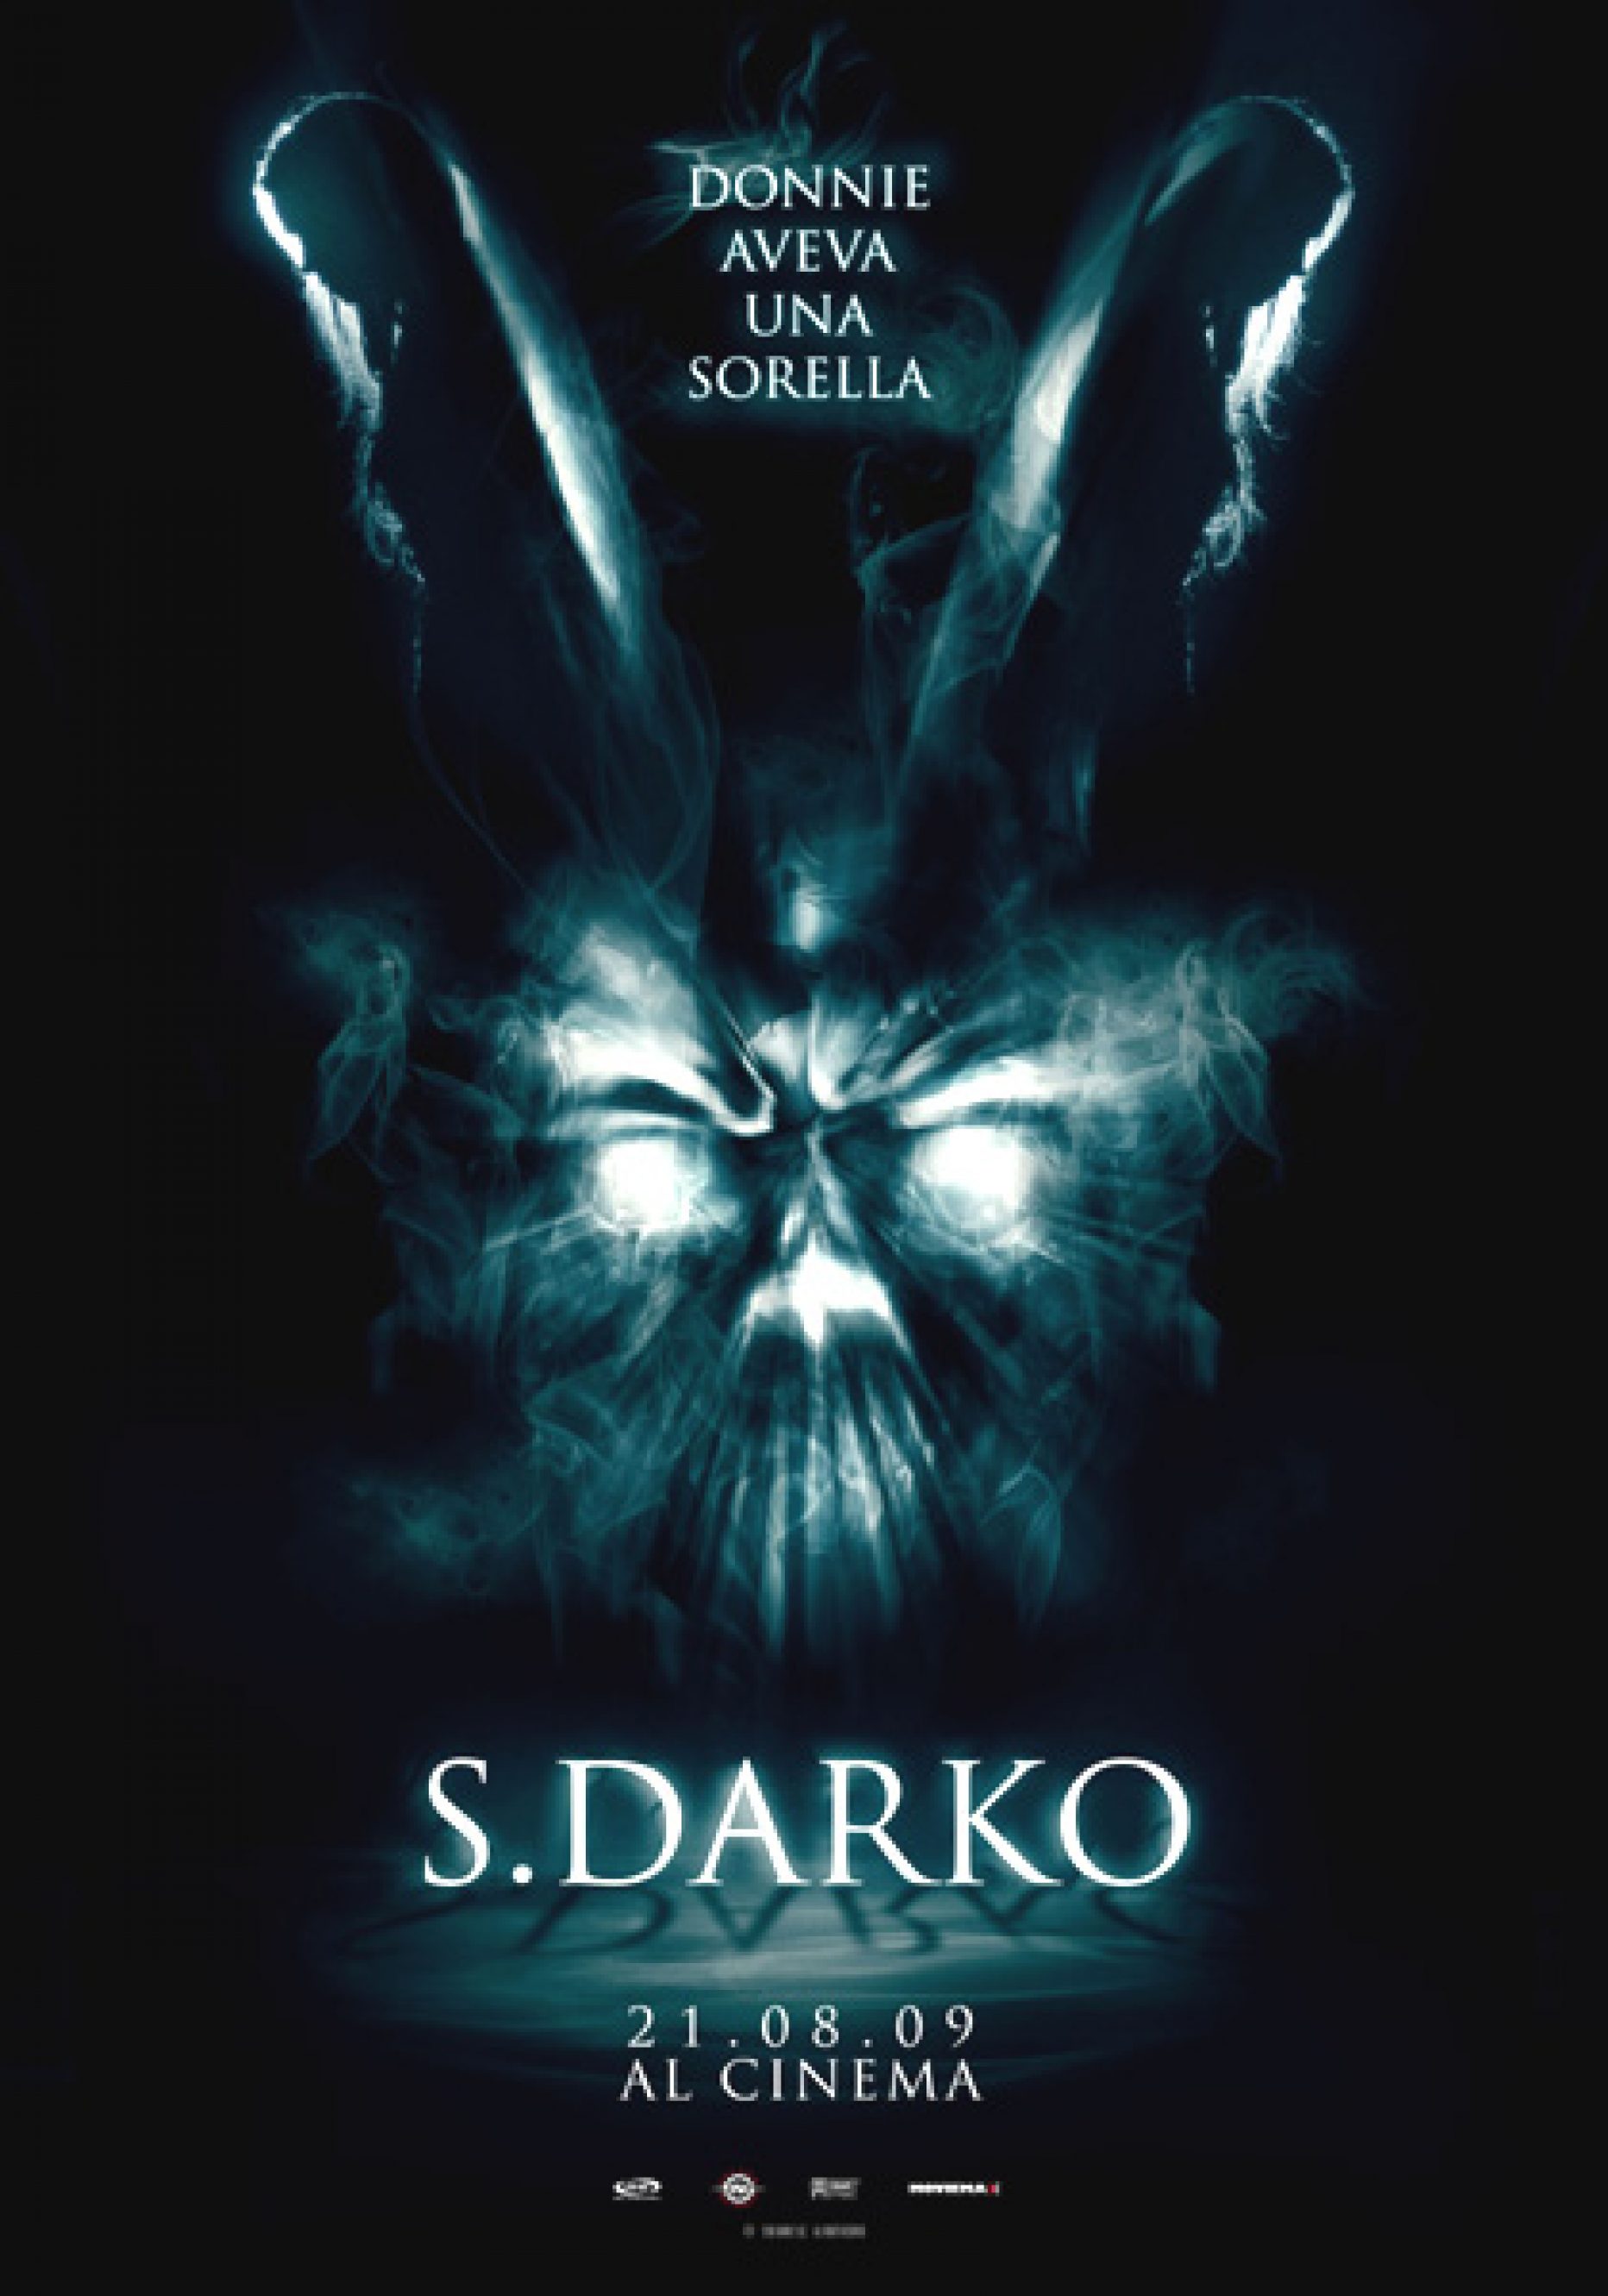 S. Darko (Fisher, 2009)